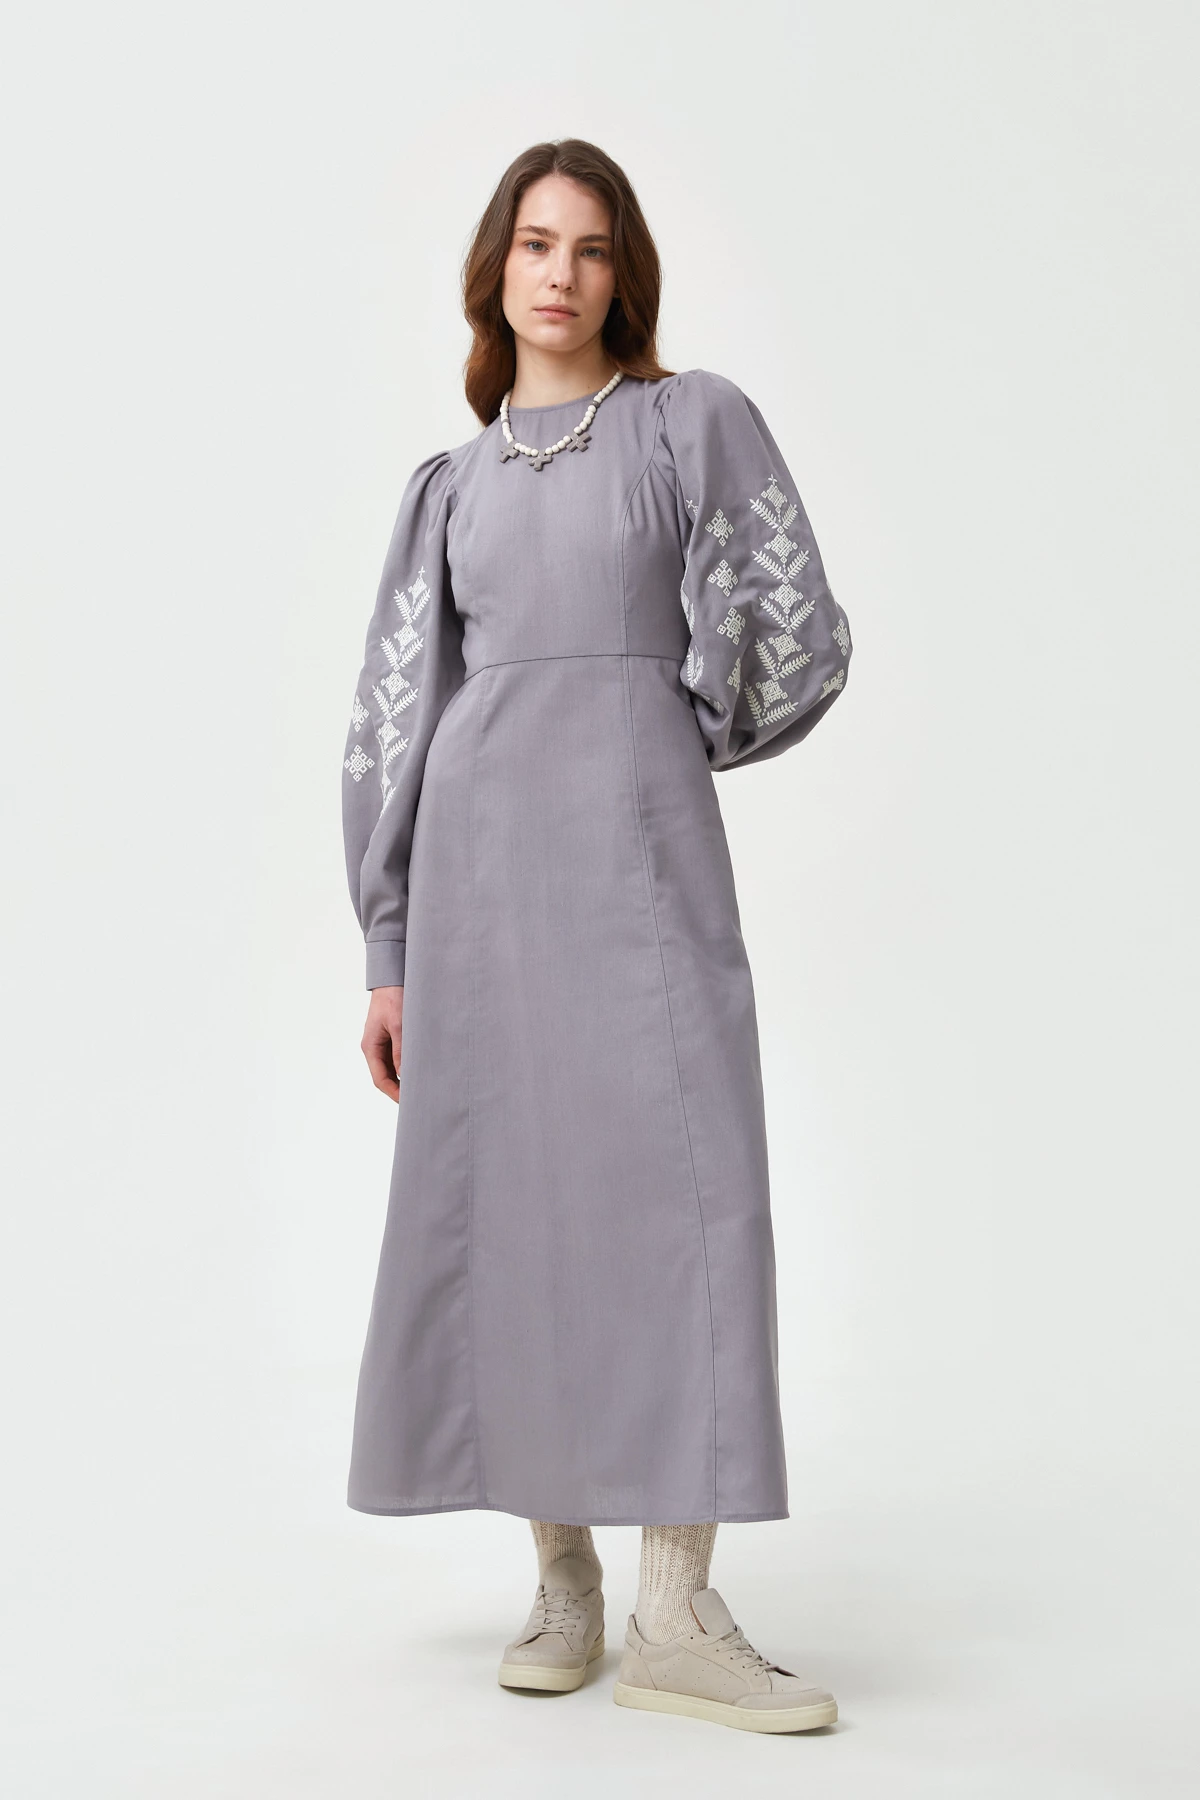 Grey linen vyshyvanka dress with rhombus embroidery, photo 3